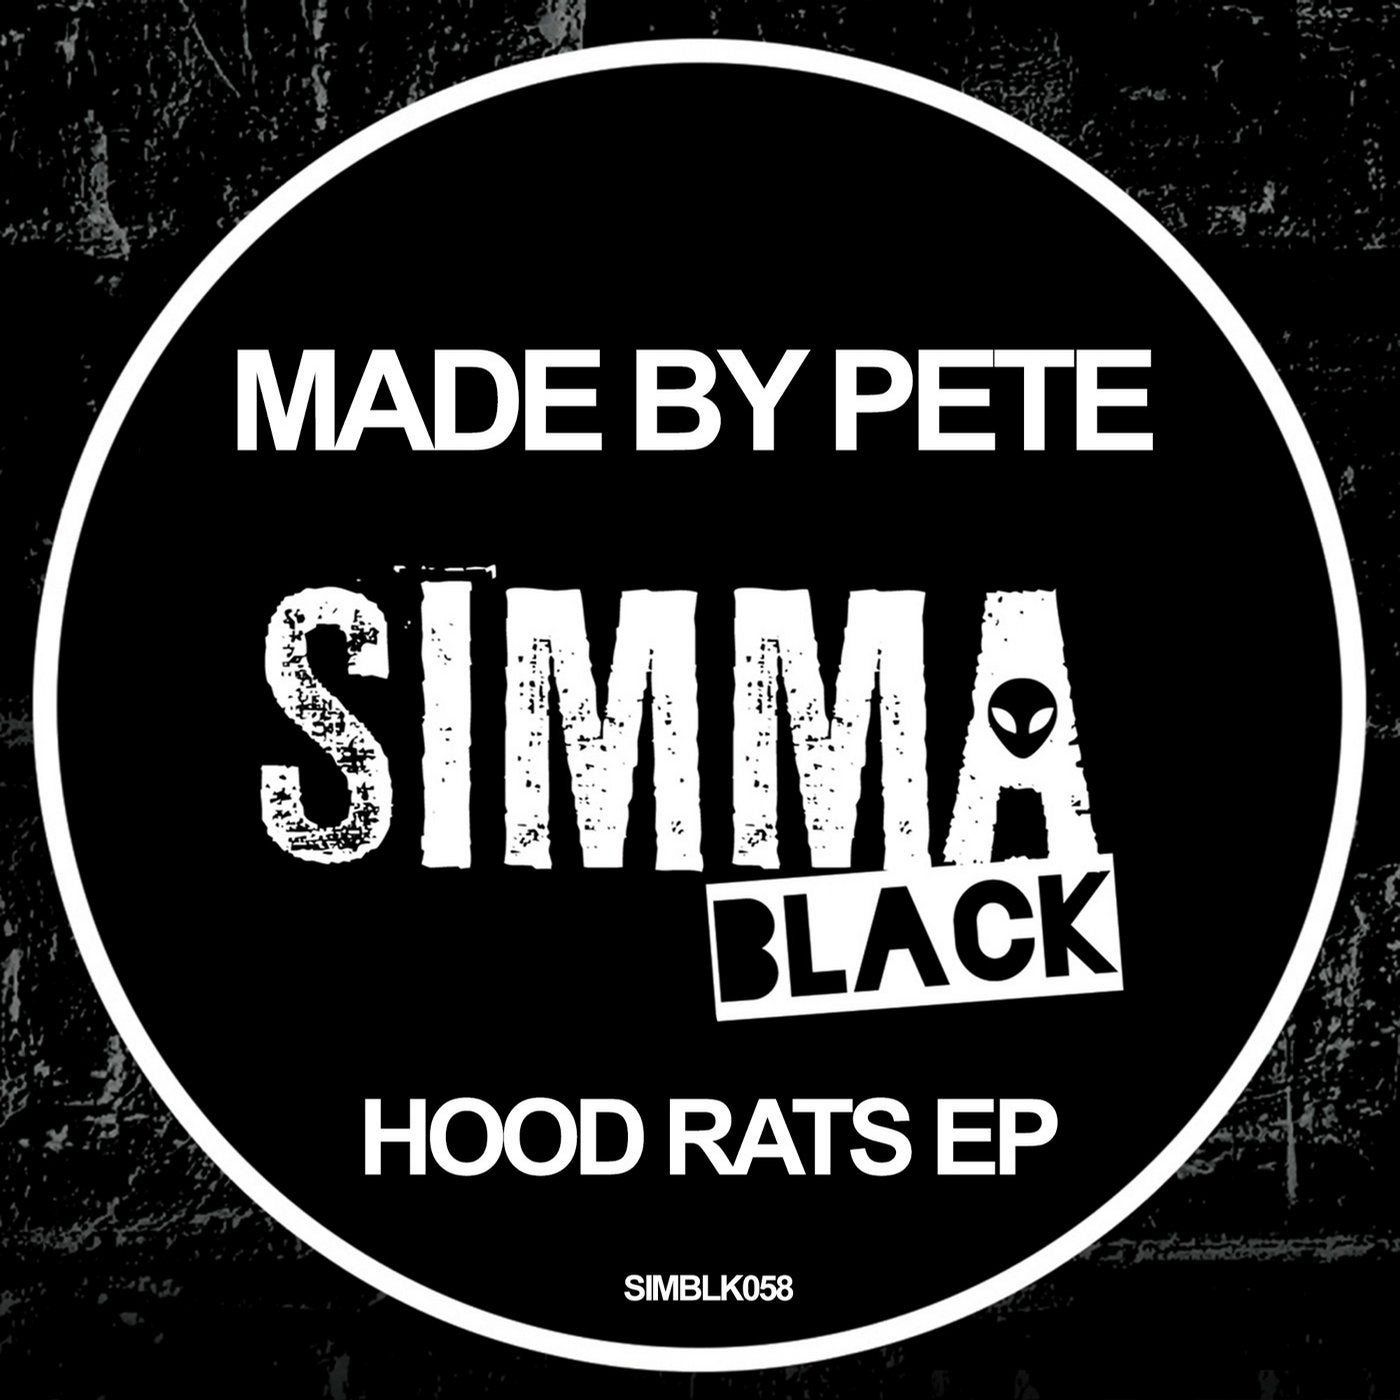 Hood Rats EP от Simma Black на Beatport.